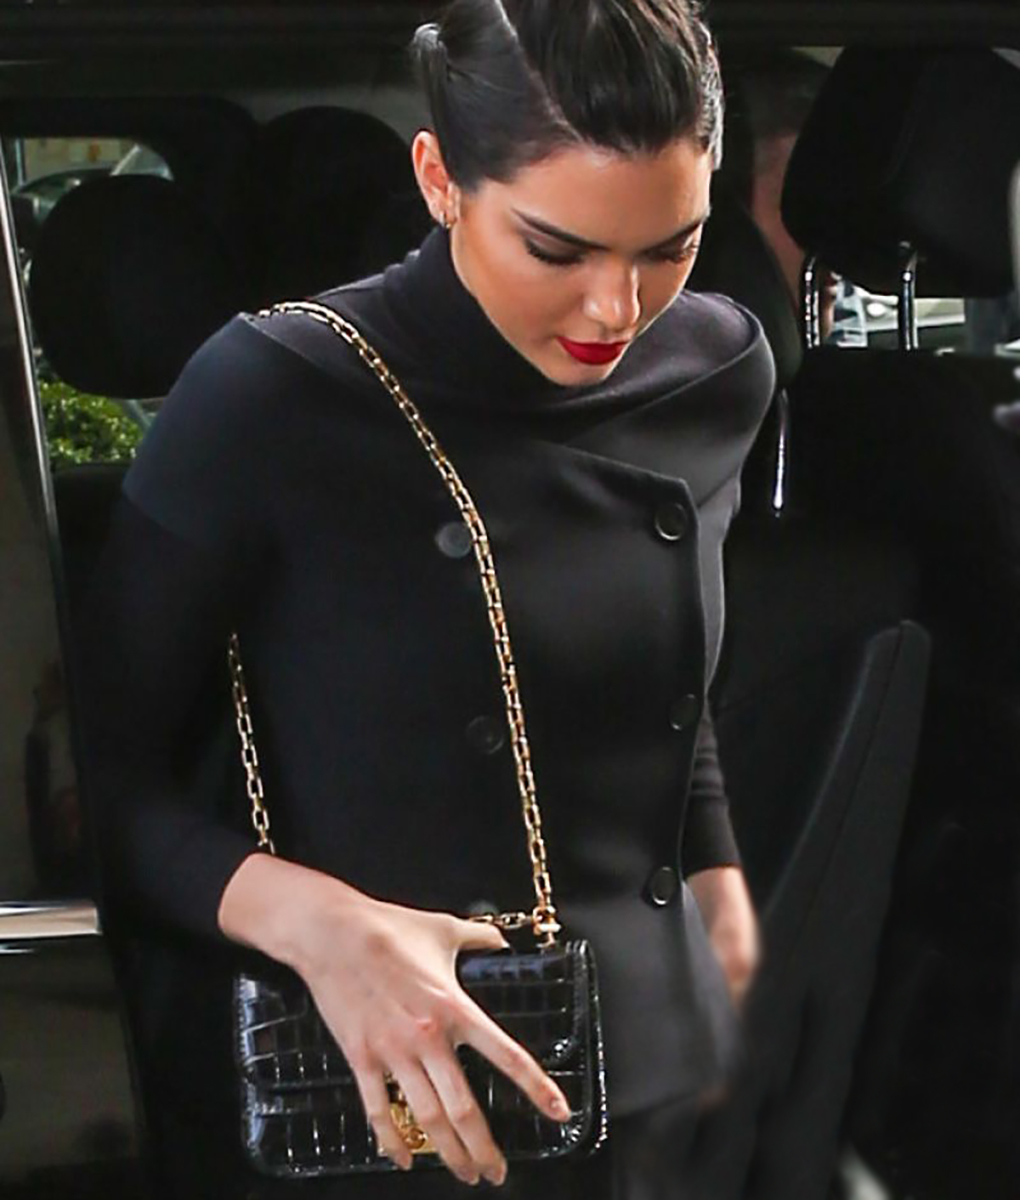 Kendall Jenner Black Double Breasted Vest